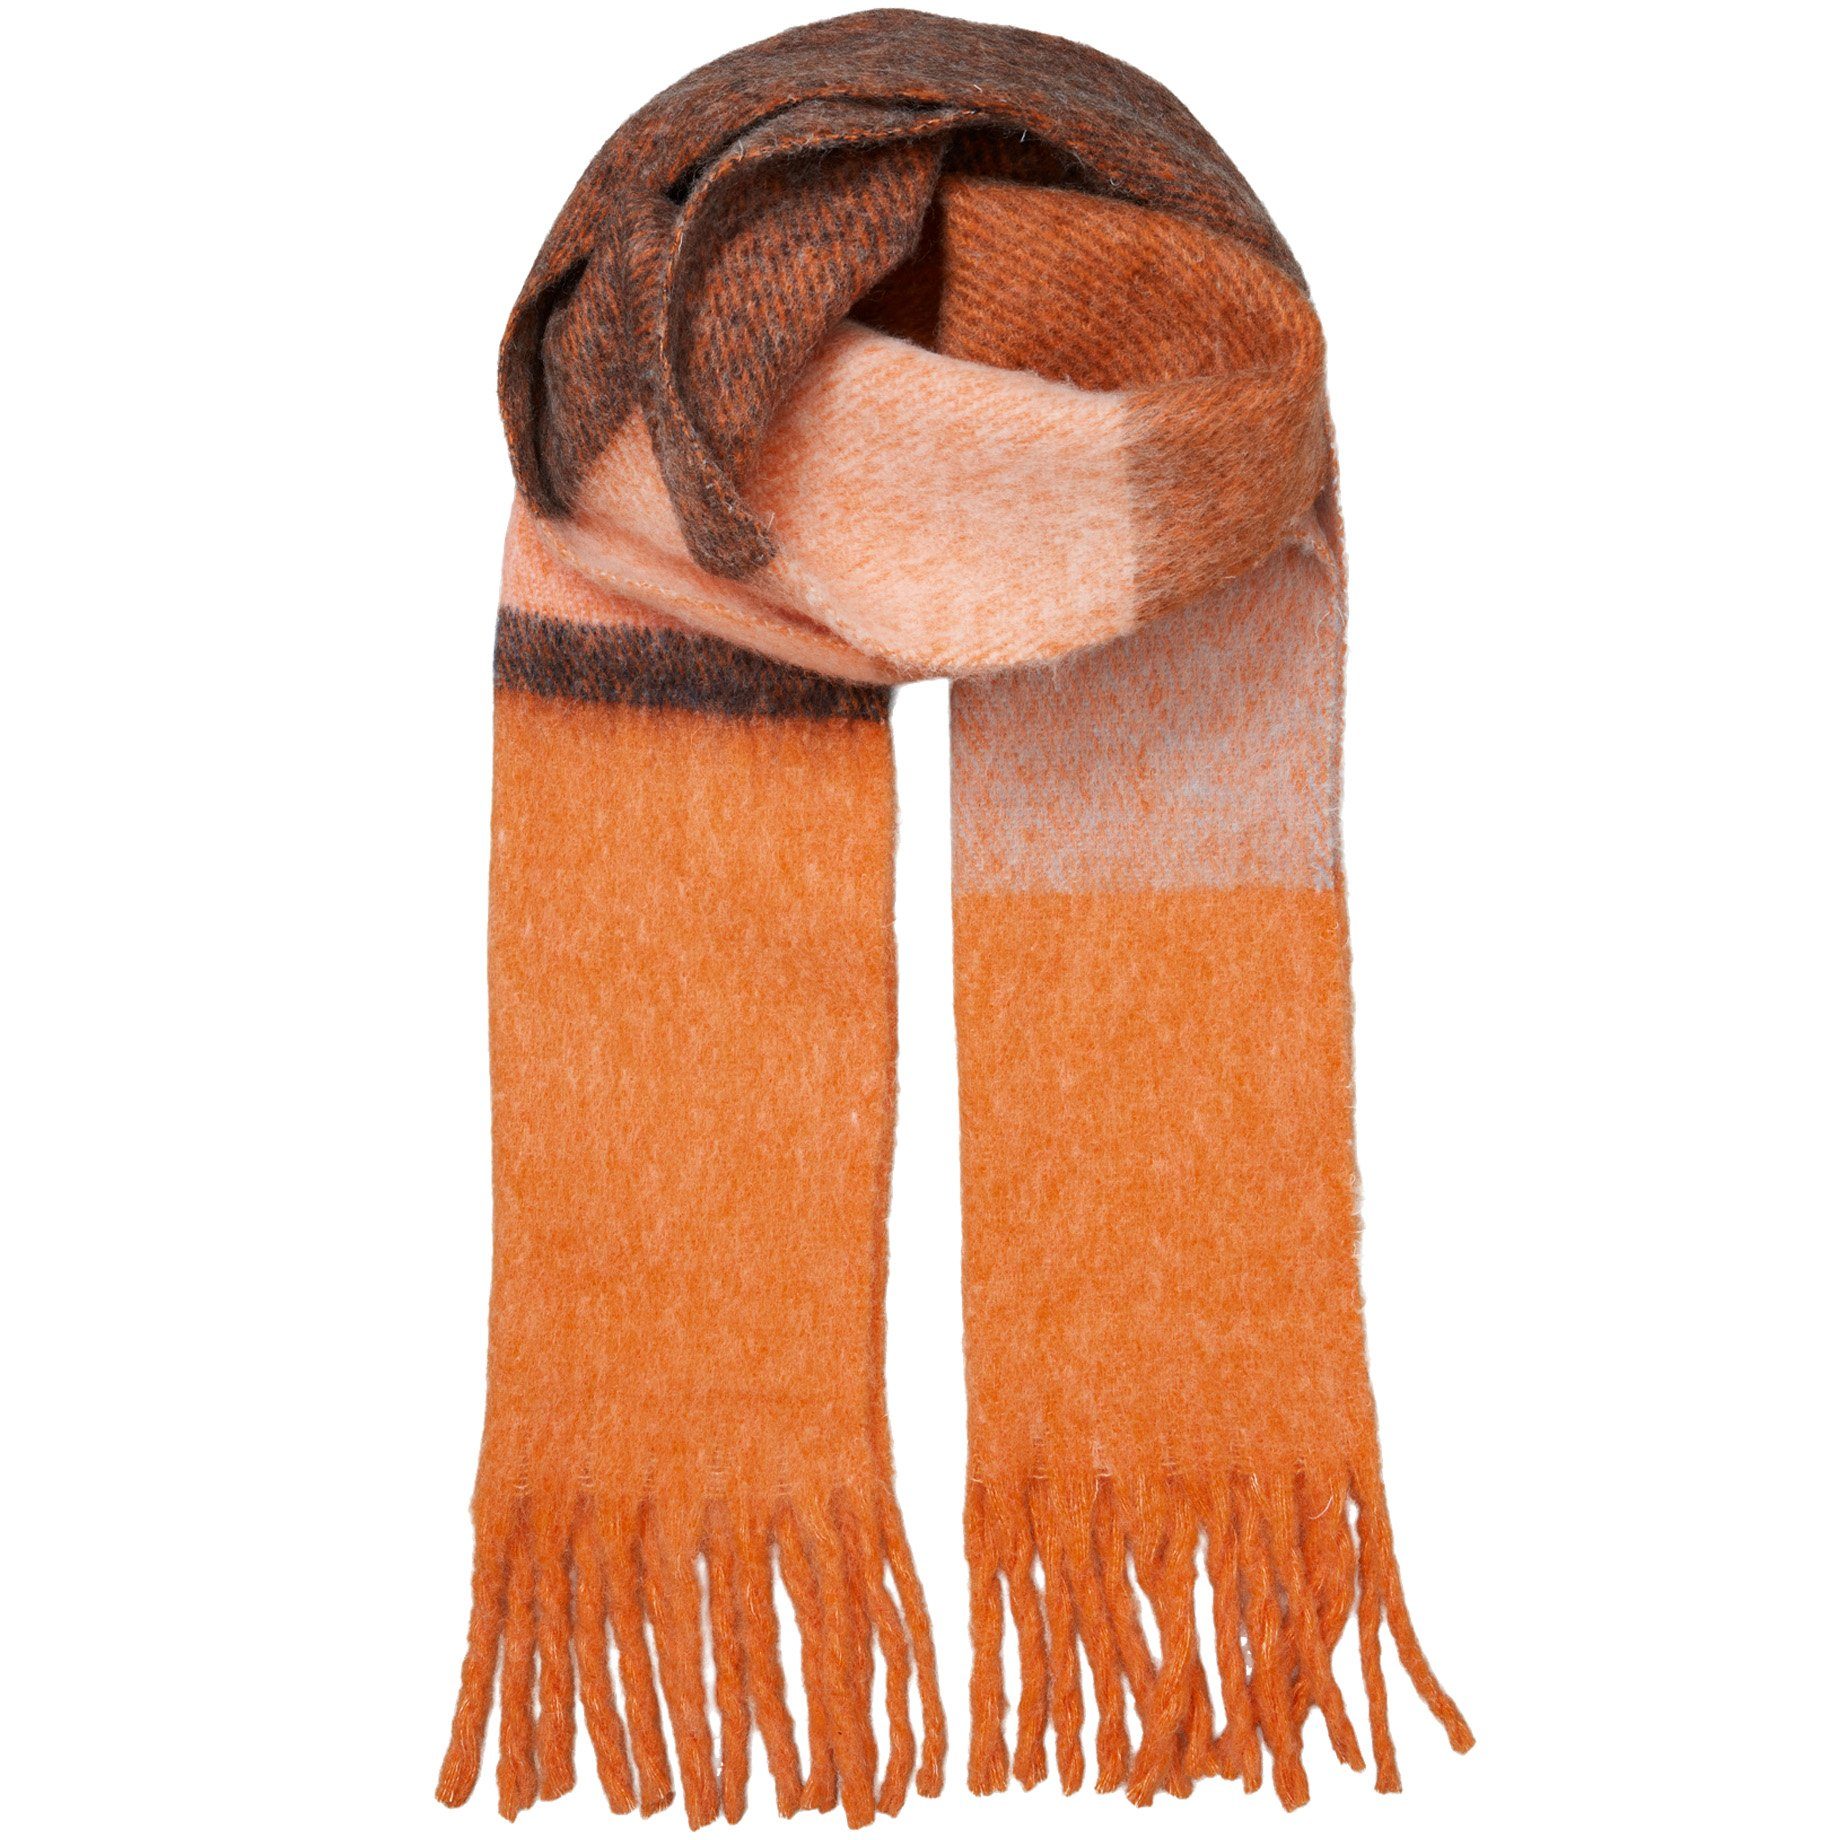 cm Schal aus Becksöndergaard 35x200 Winterschal Wollmischung Damen Orange - Bartletts Winter Modeschal